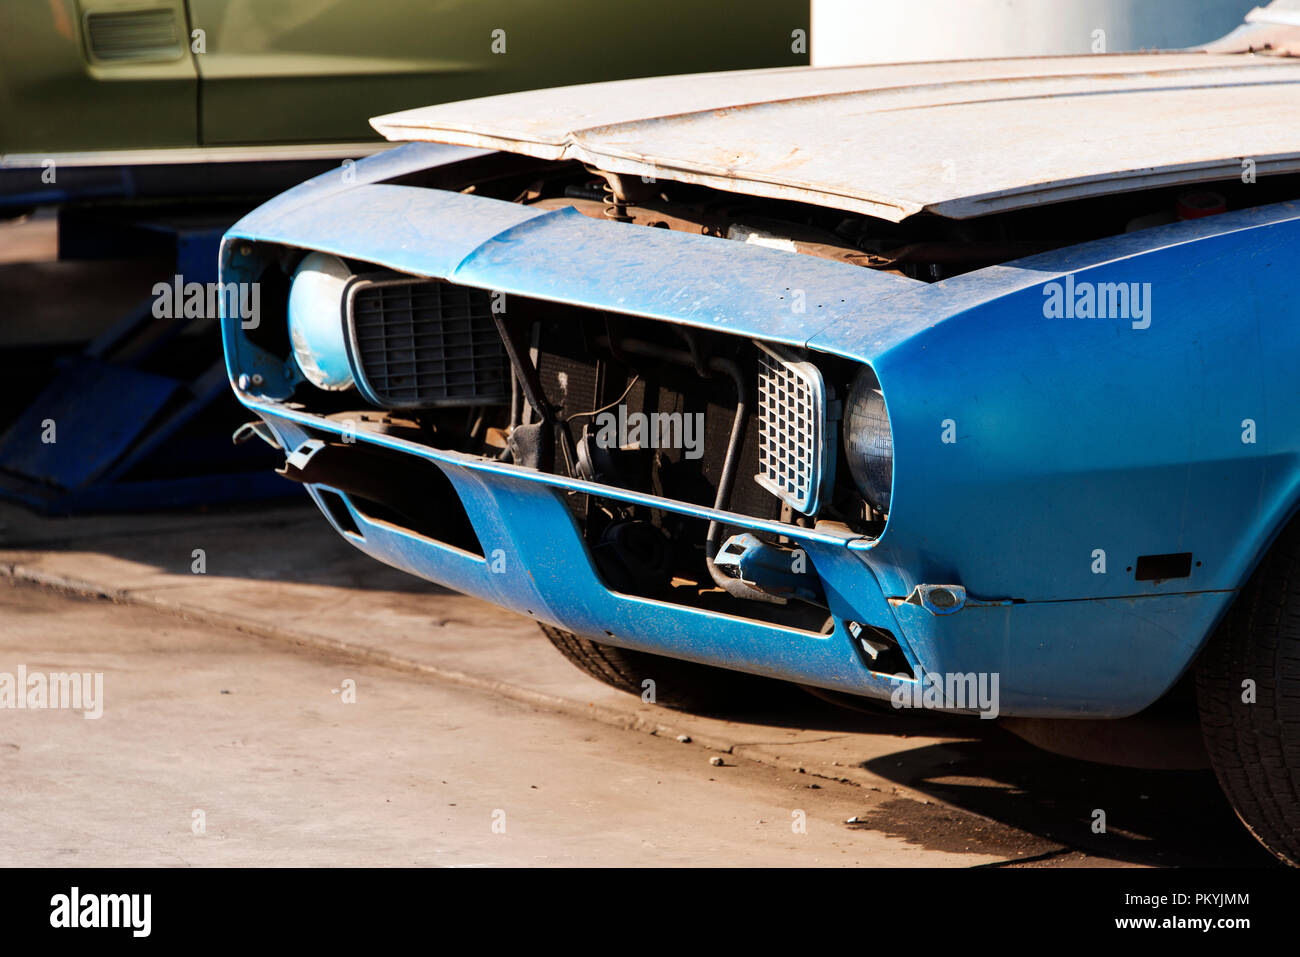 Oldtimer car in garage Stock Photo - Alamy